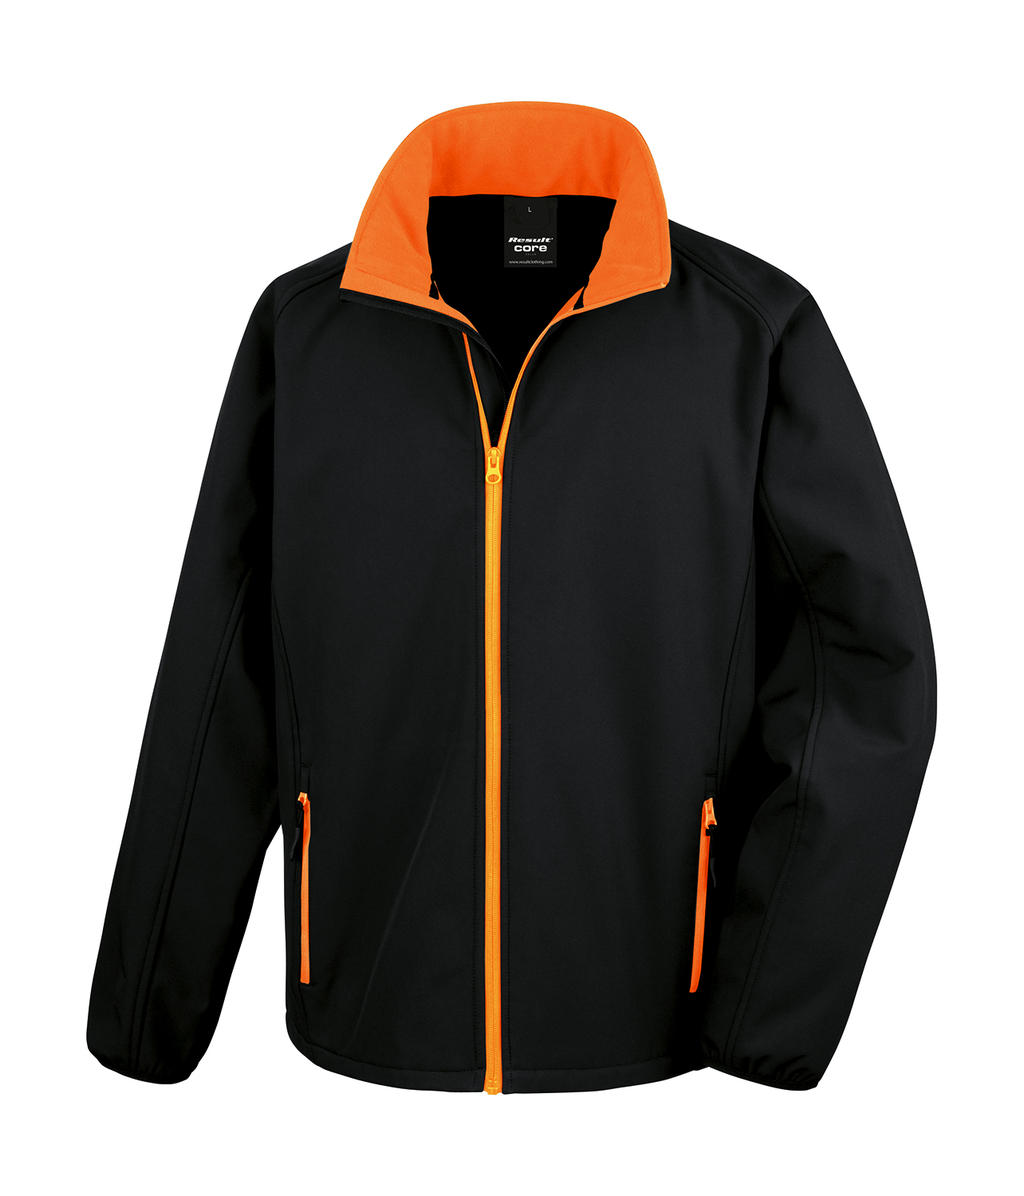  Printable Softshell Jacket in Farbe Black/Orange